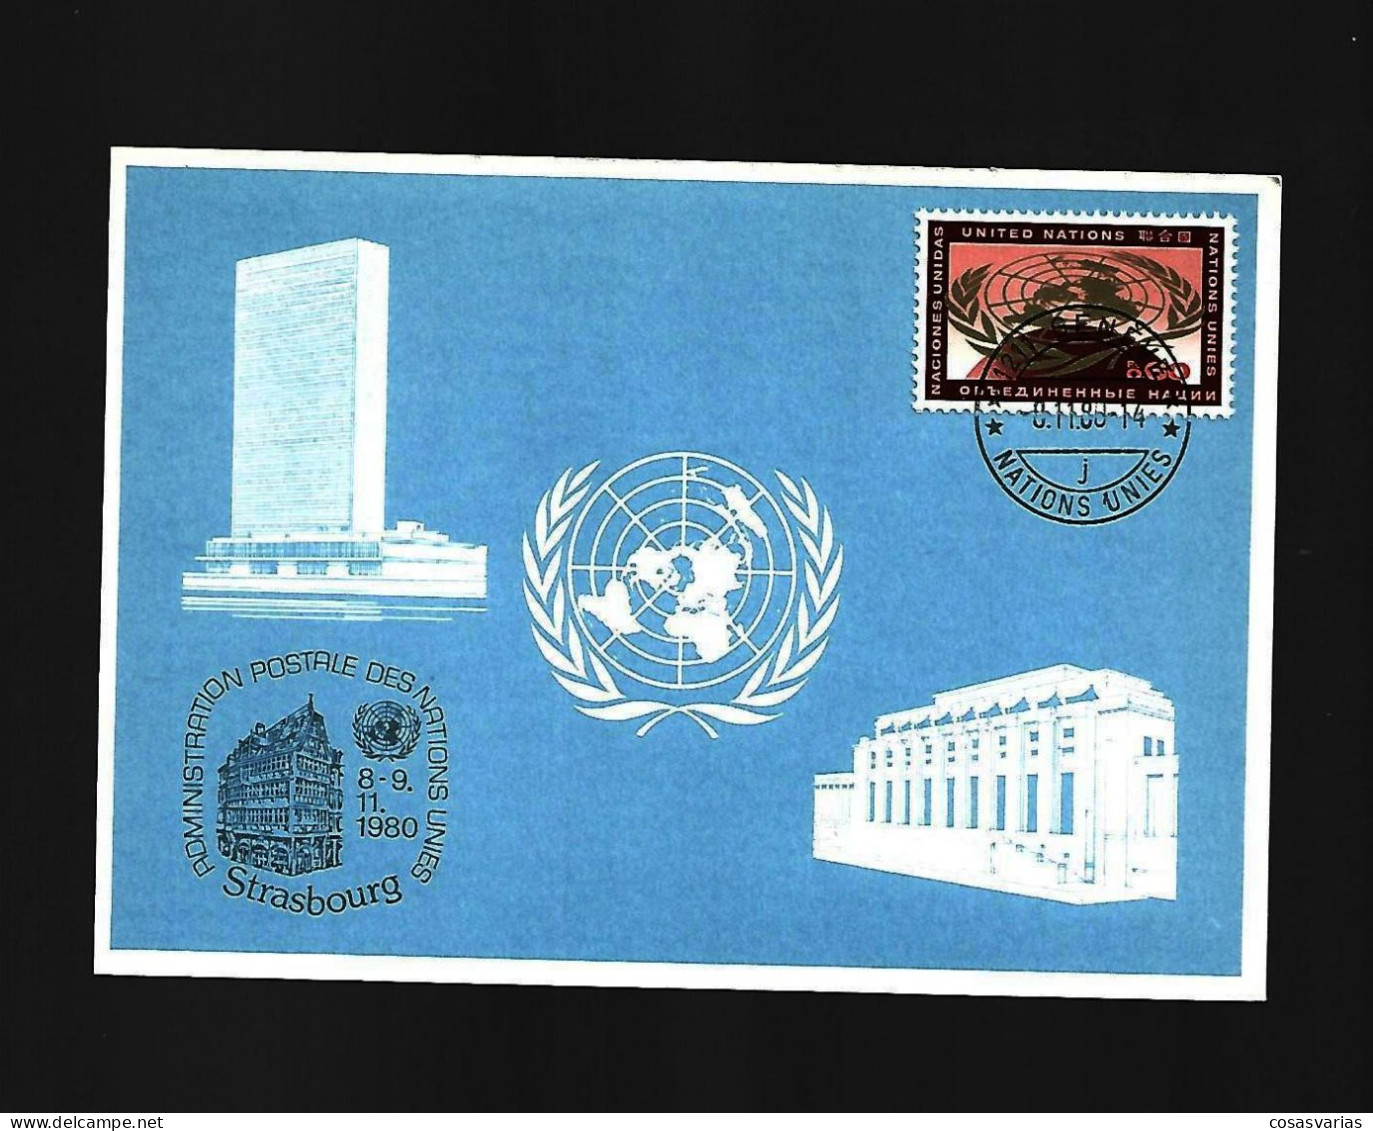 ADMINISTRATION POSTALE NATIONS UNIES 1980 STRASBOURG UNITED NATIONS UNIES - Emissions Communes New York/Genève/Vienne